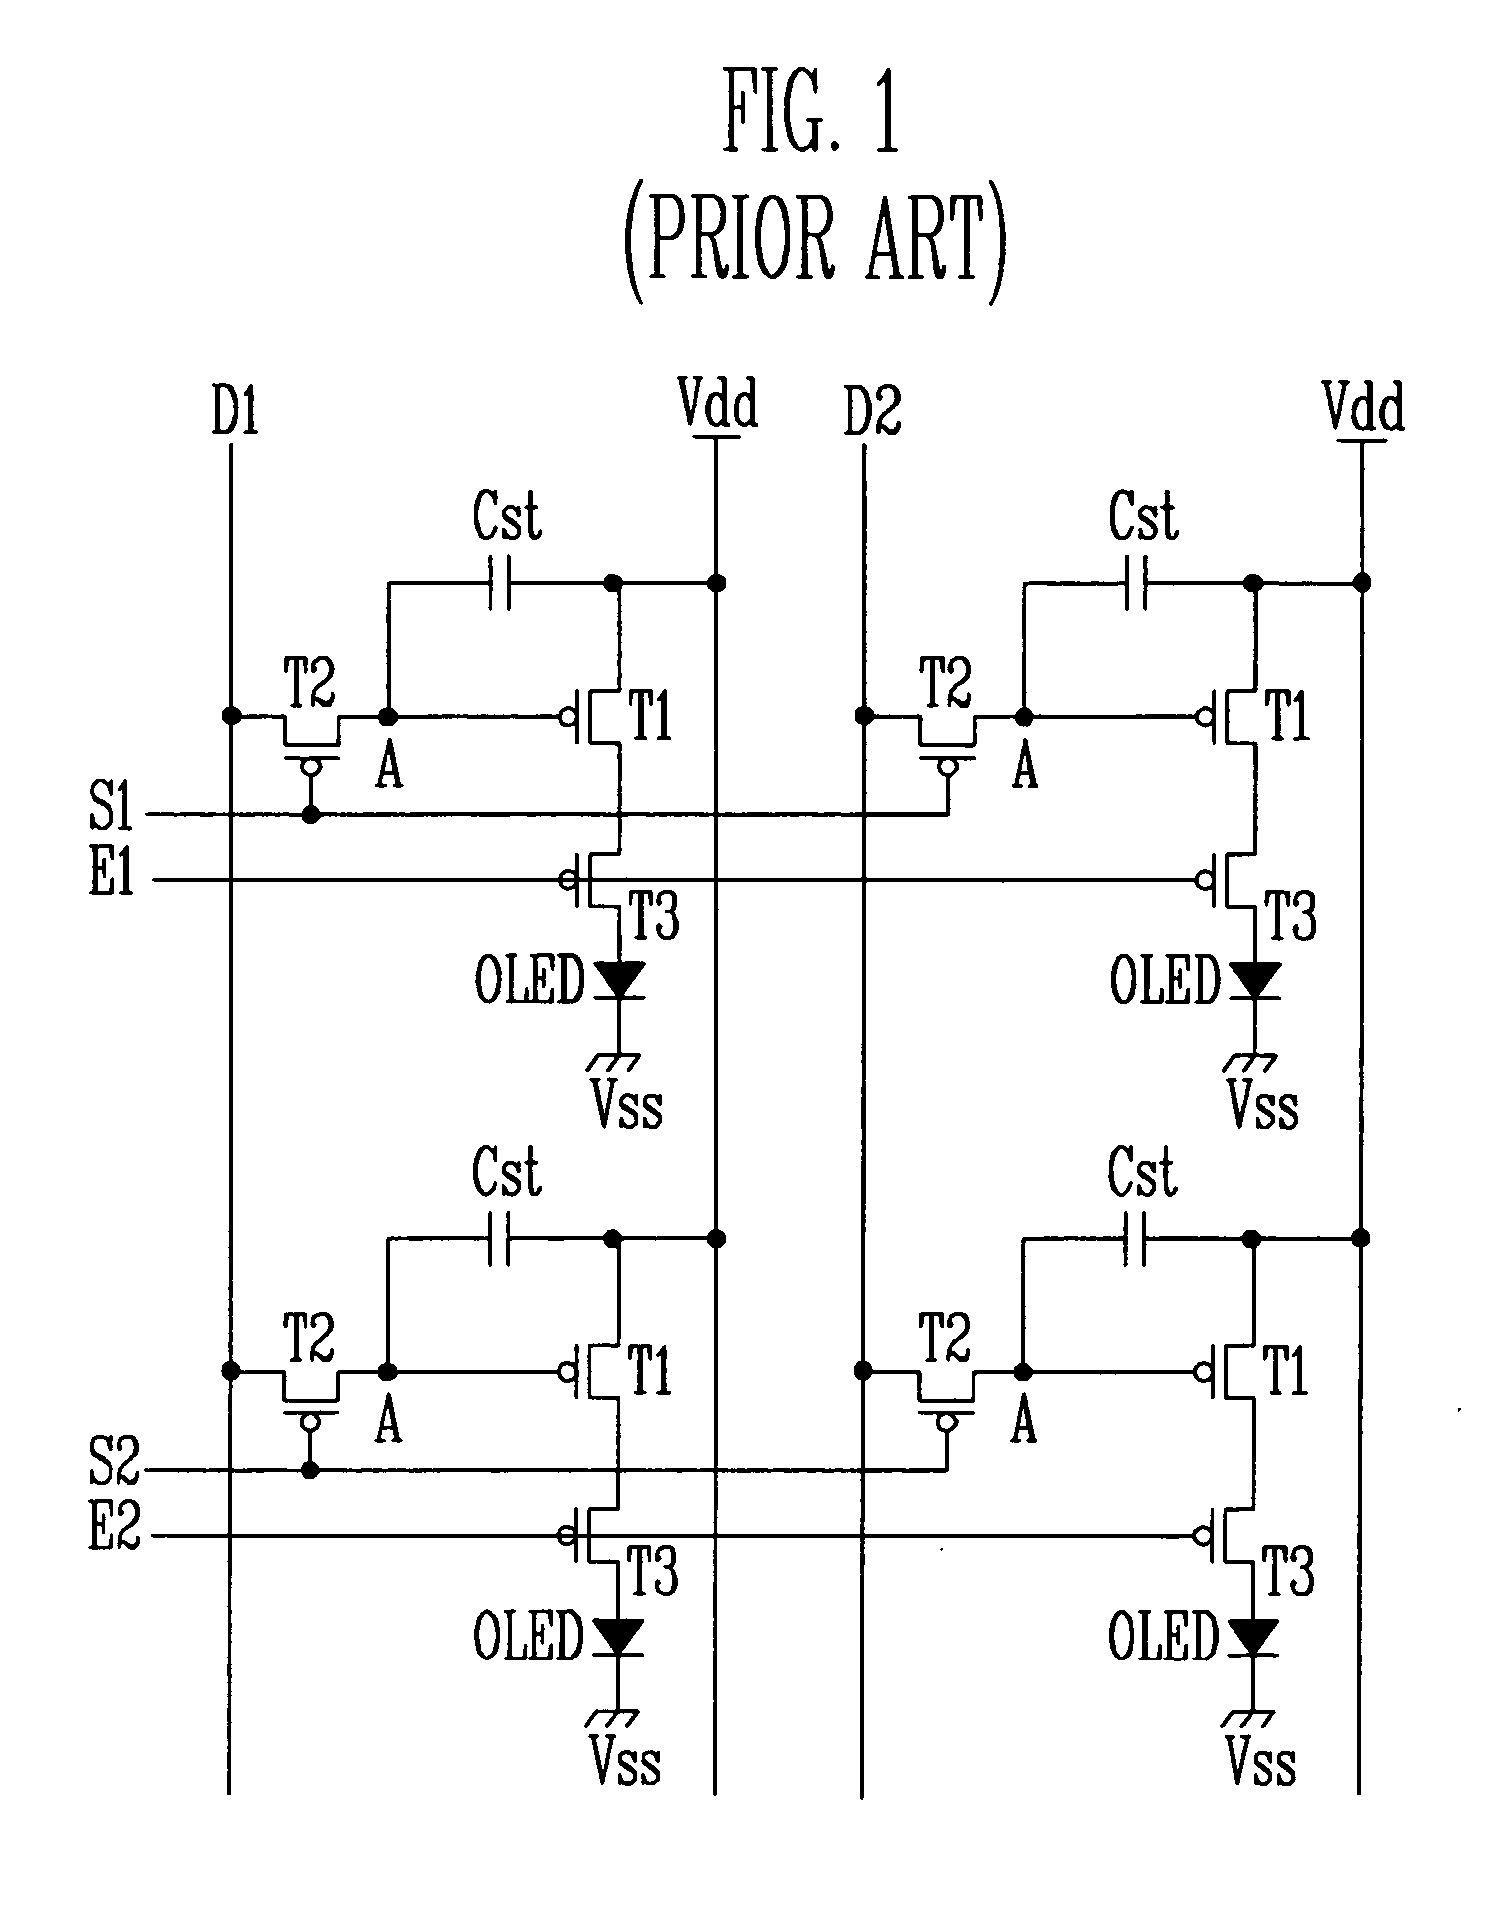 Pixel circuit and light emitting display